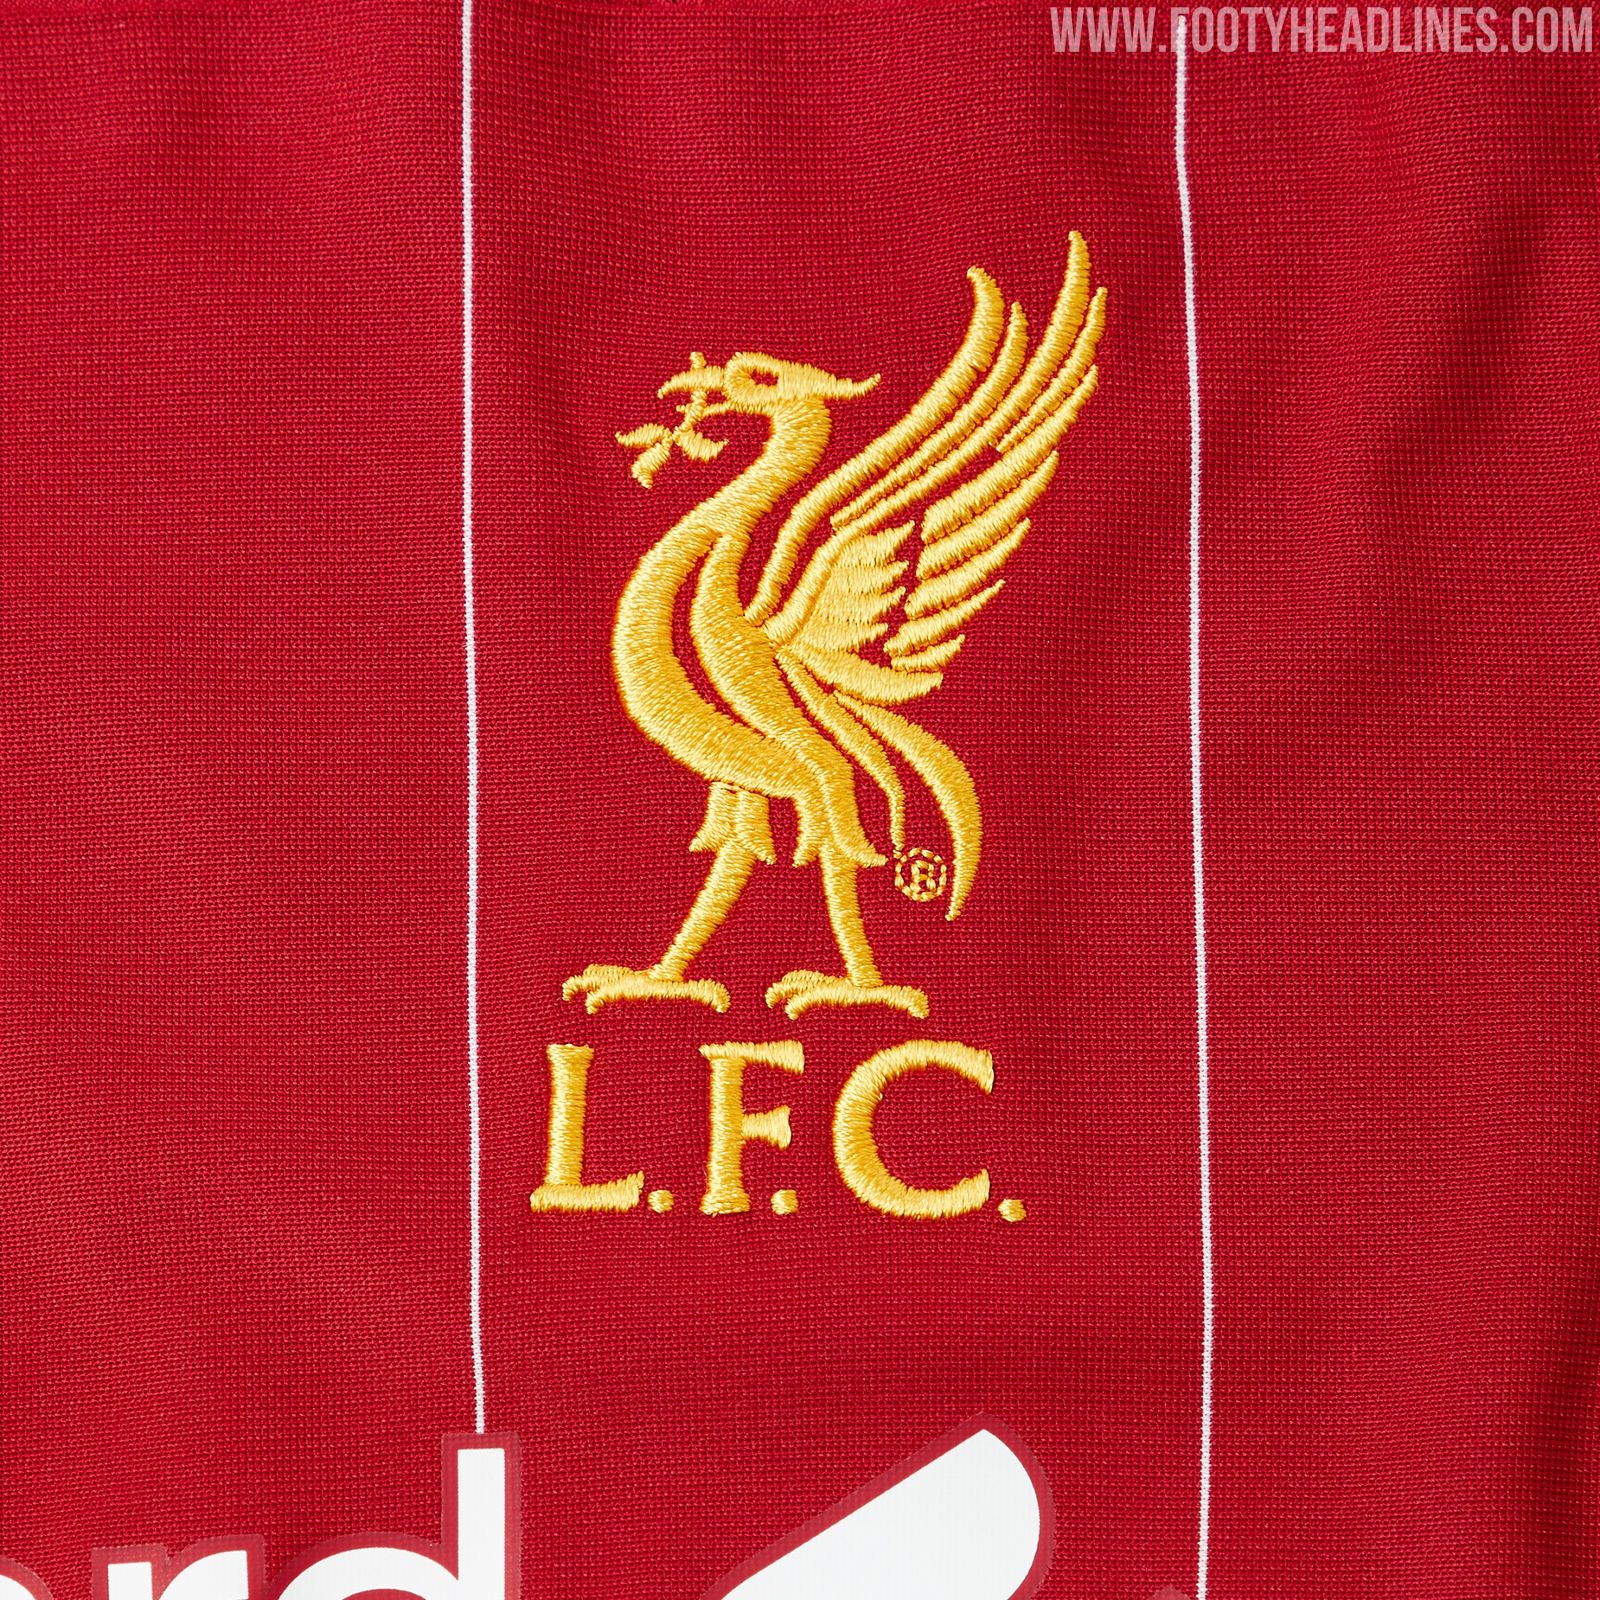 Liverpool 19-20 Home Kit Released - Footy Headlines